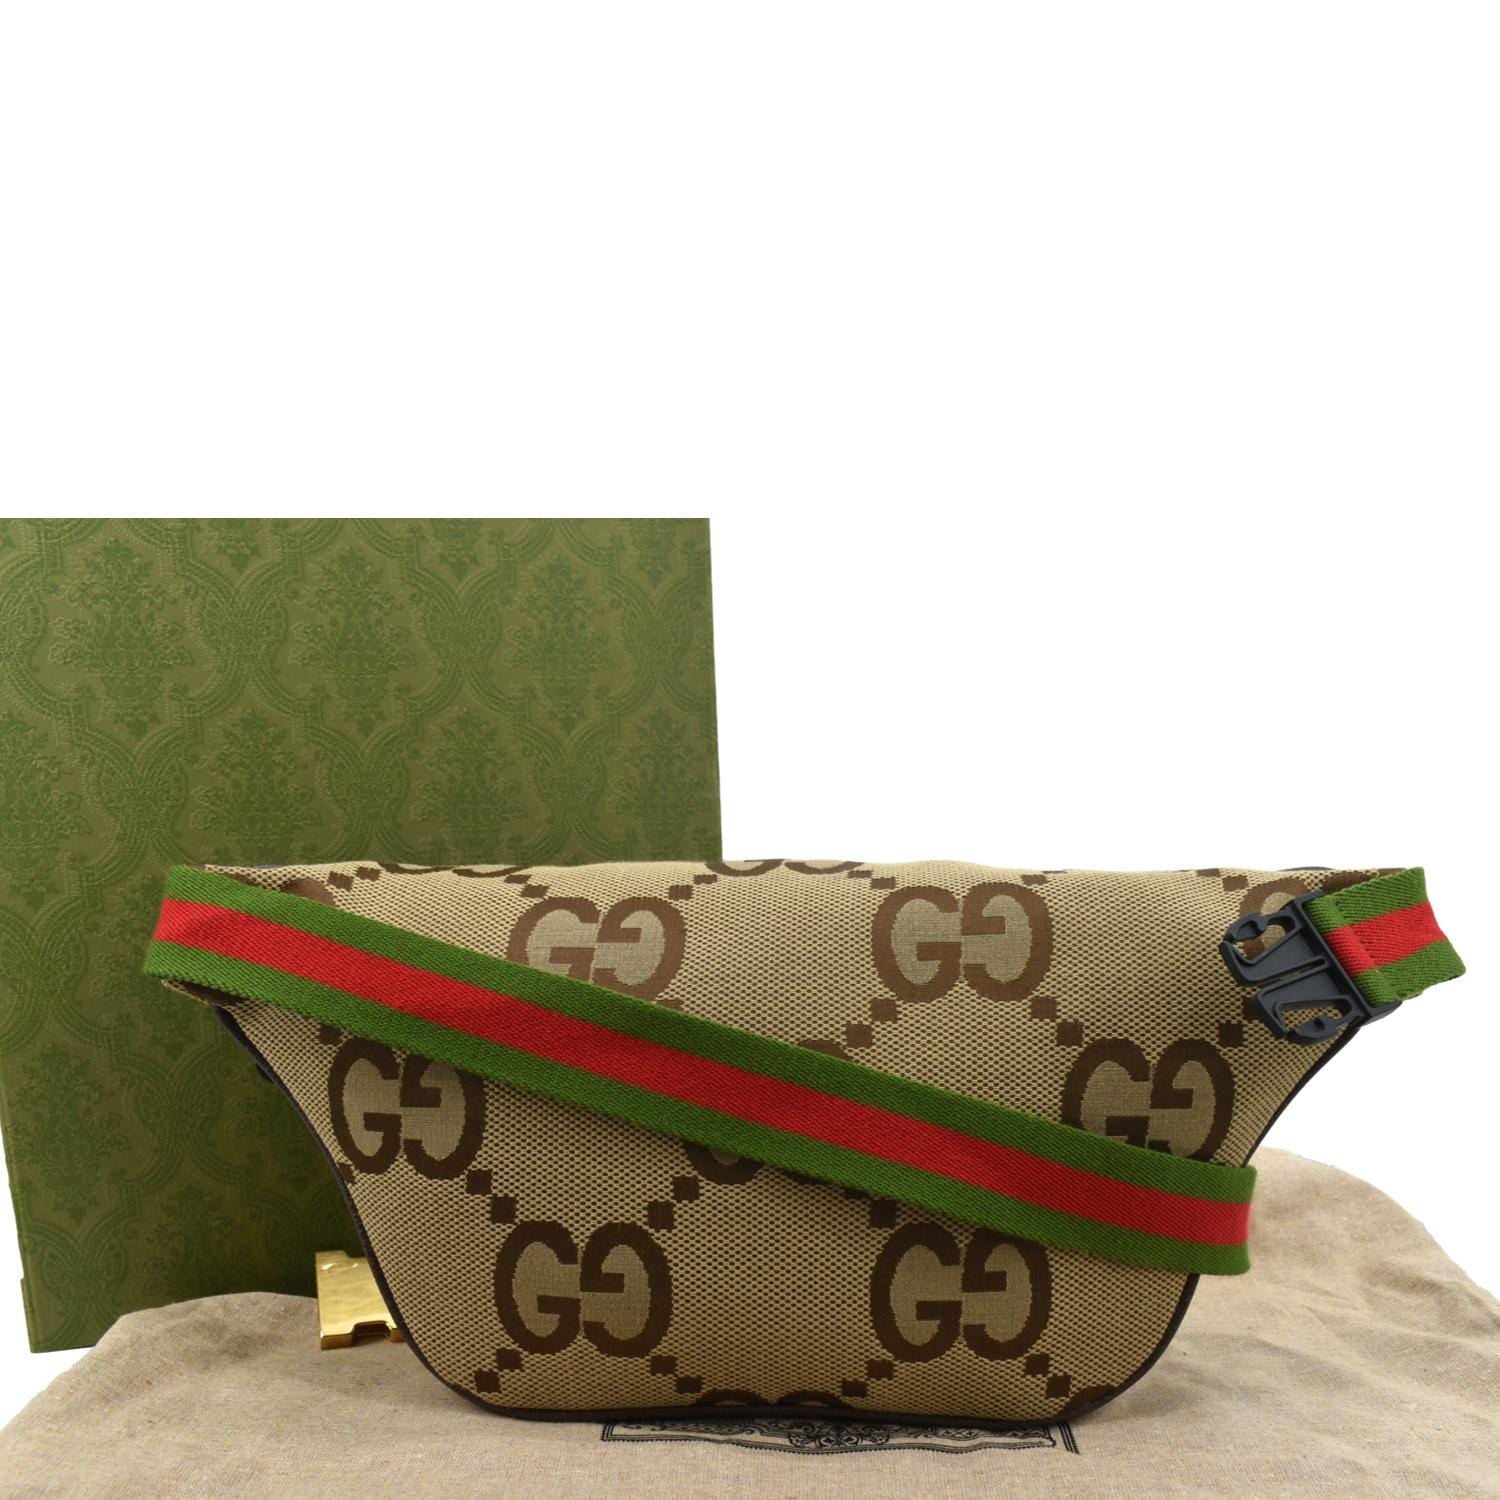 Jumbo GG messenger bag in camel and ebony GG Canvas